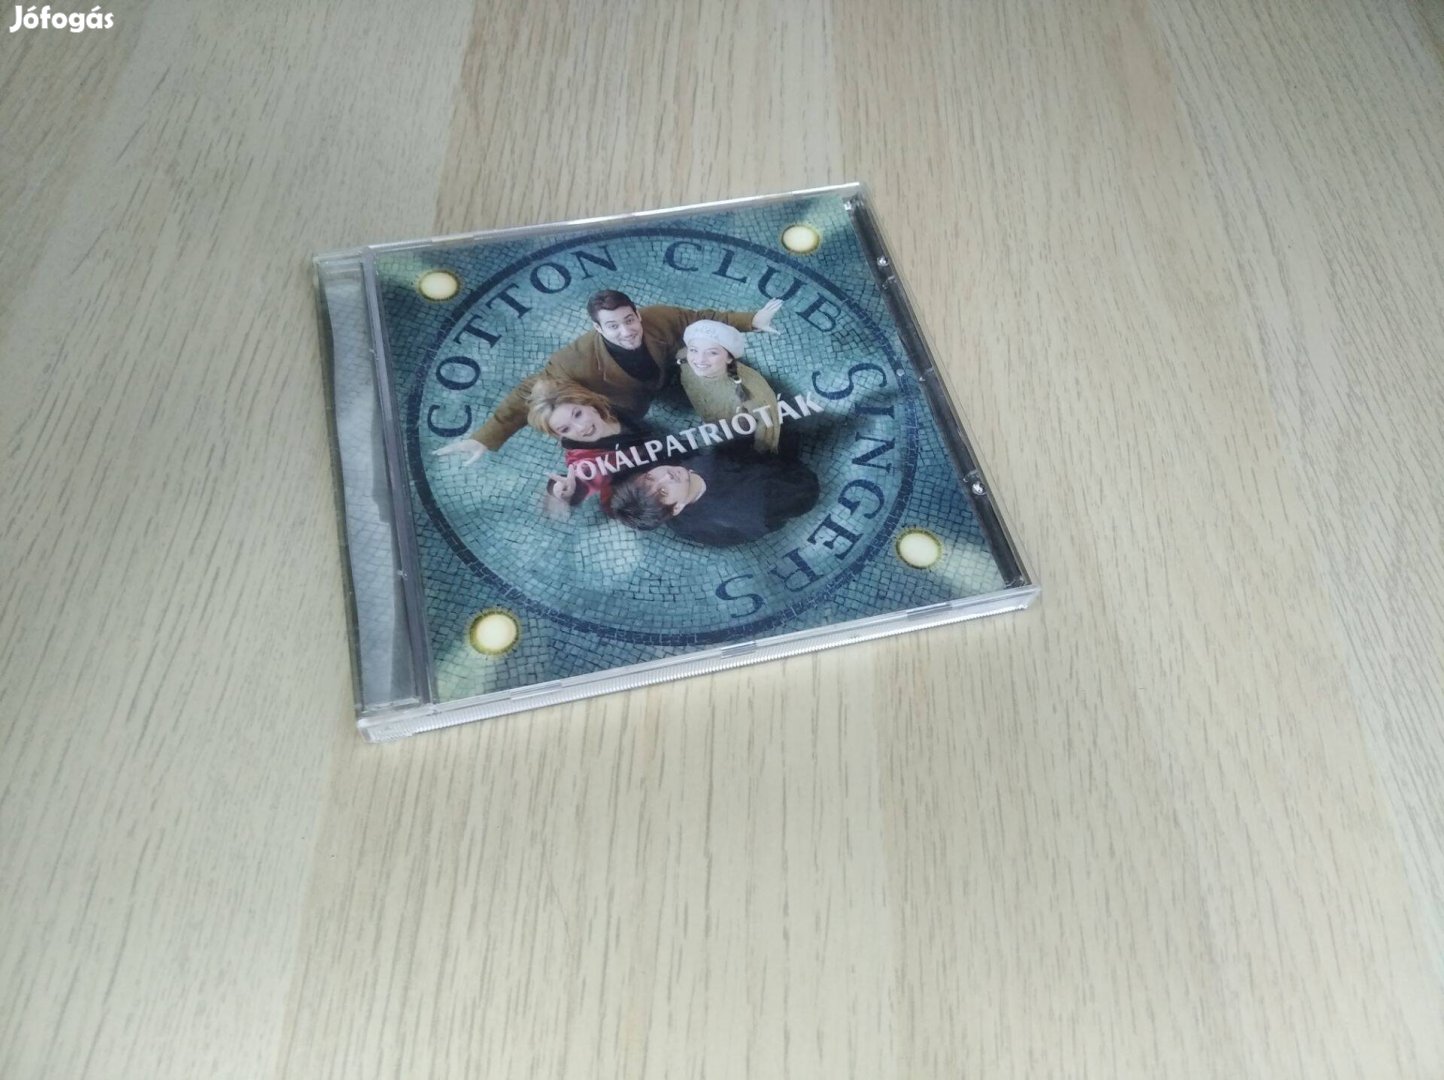 Cotton Club Singers - Vokálpatrióták / CD 1999